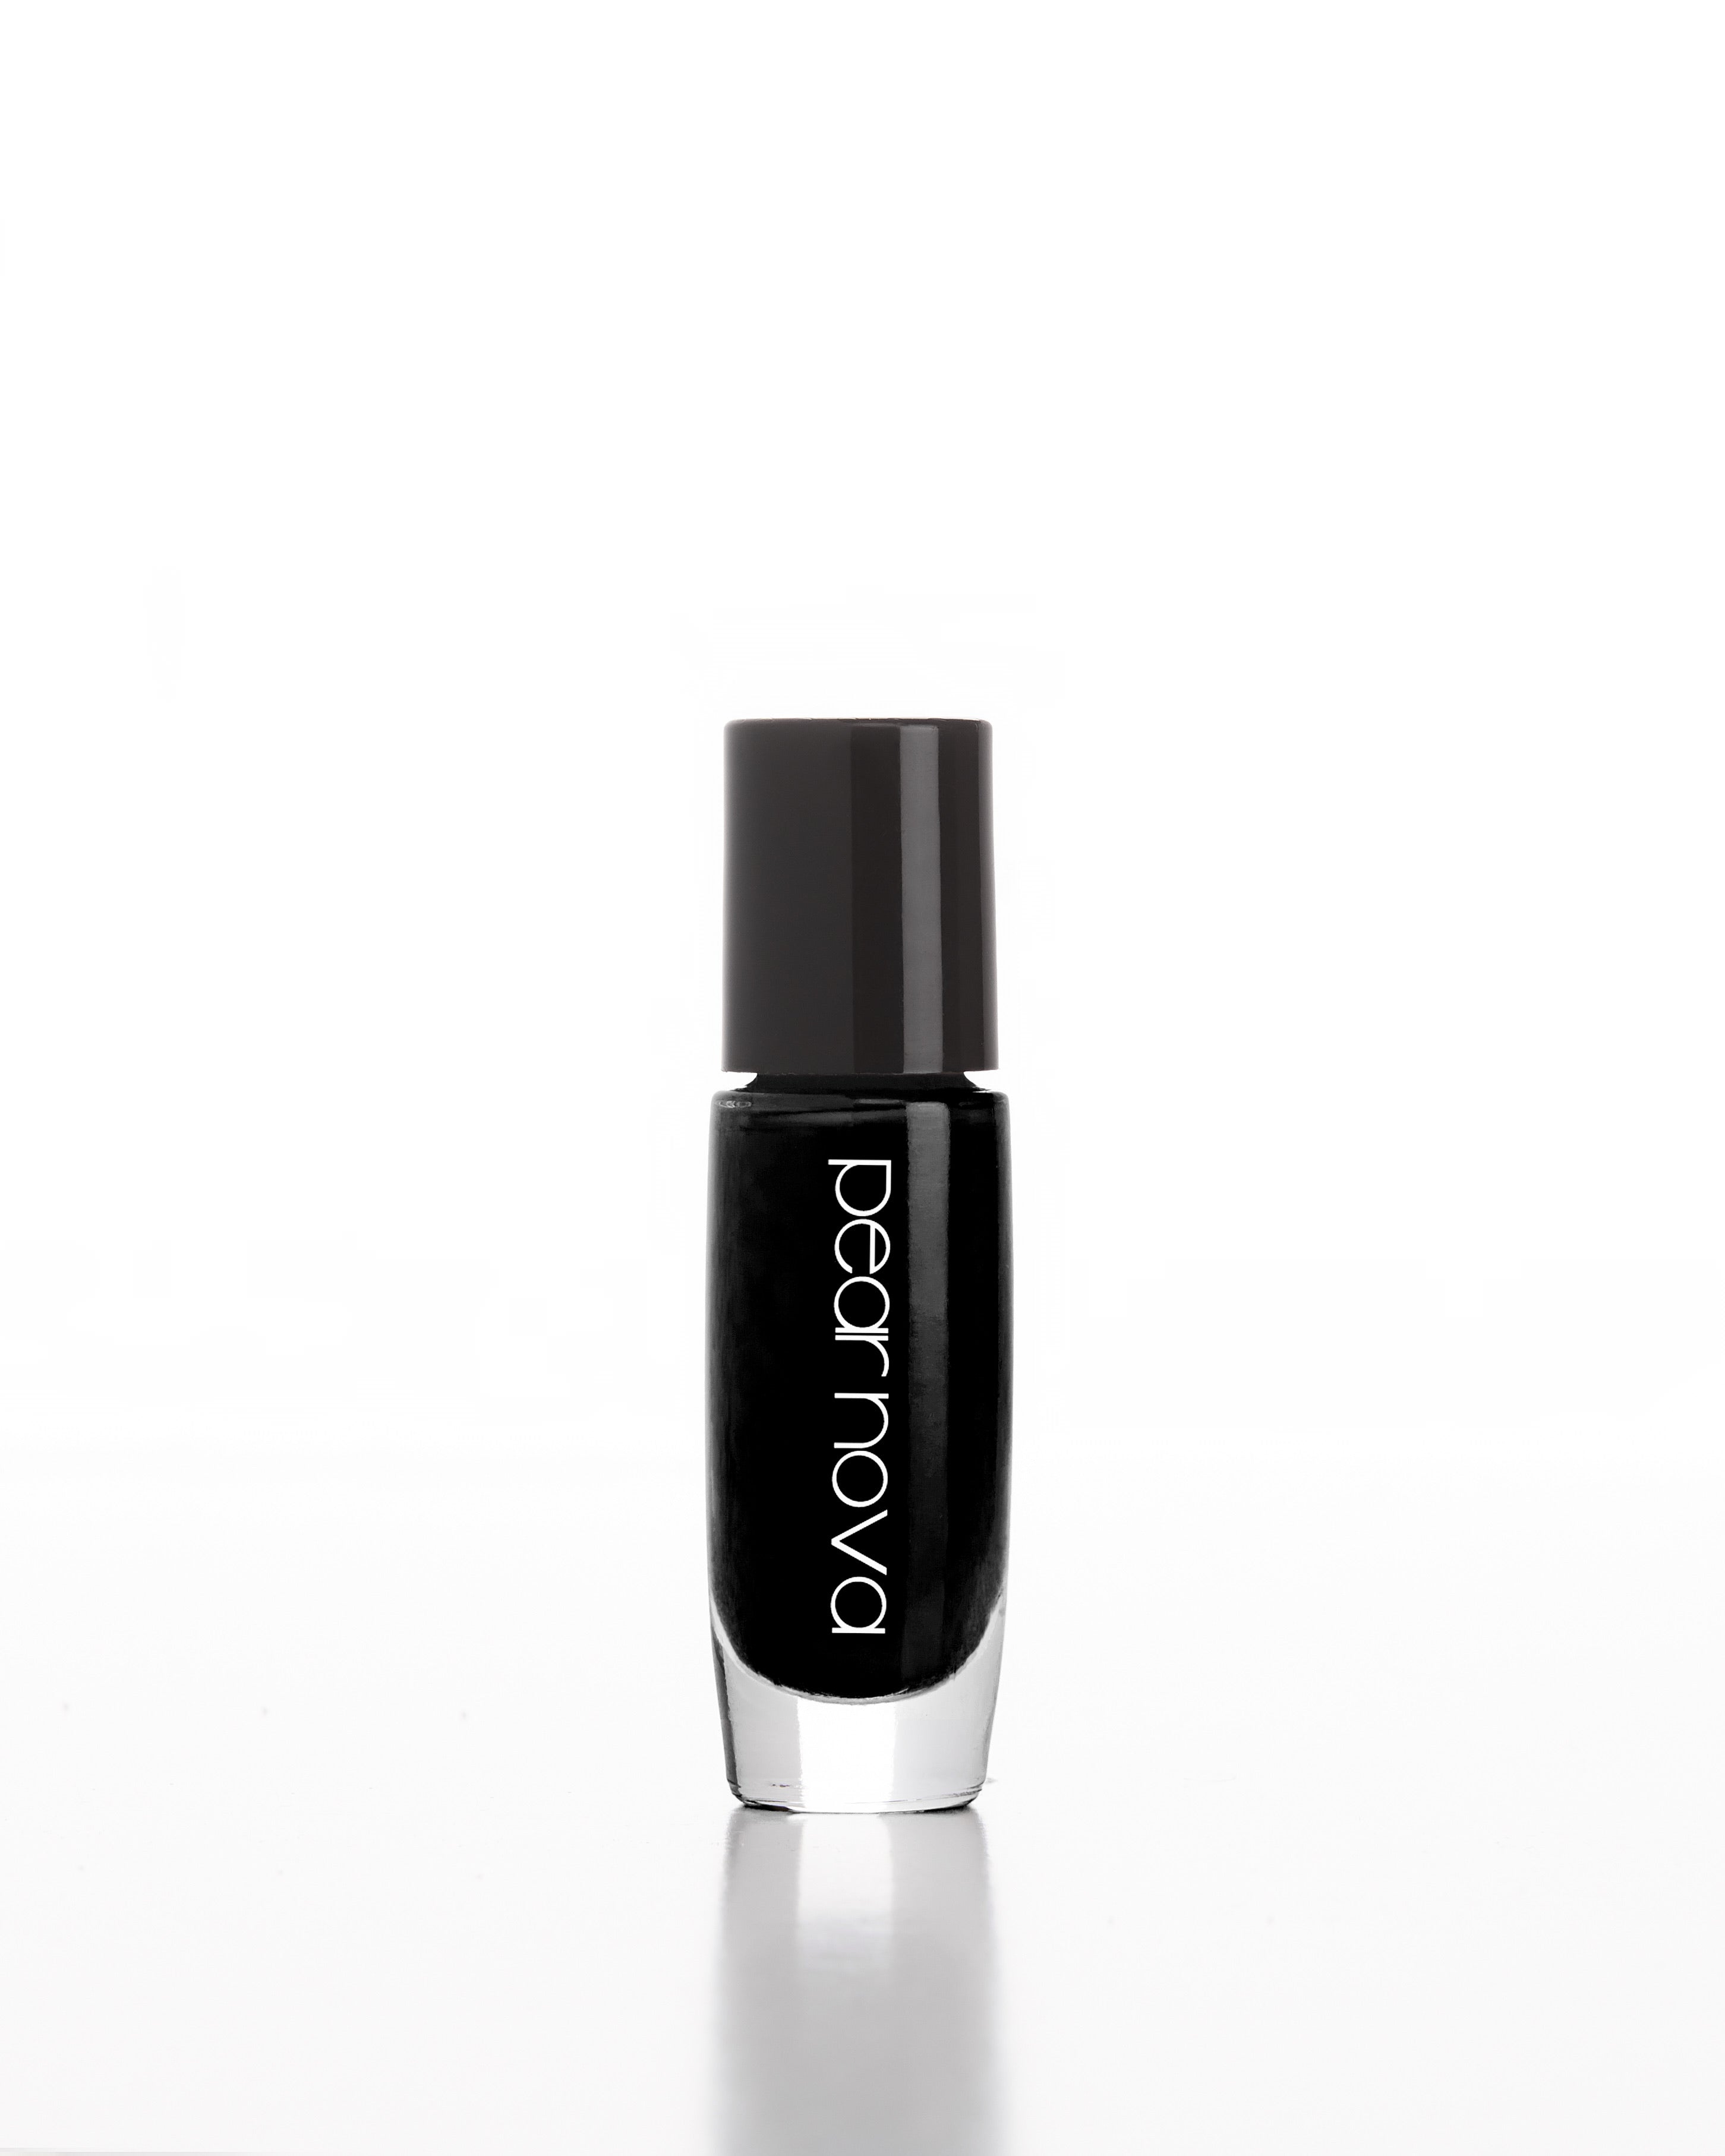 bottle of Pear Nova Absorb black nail polish